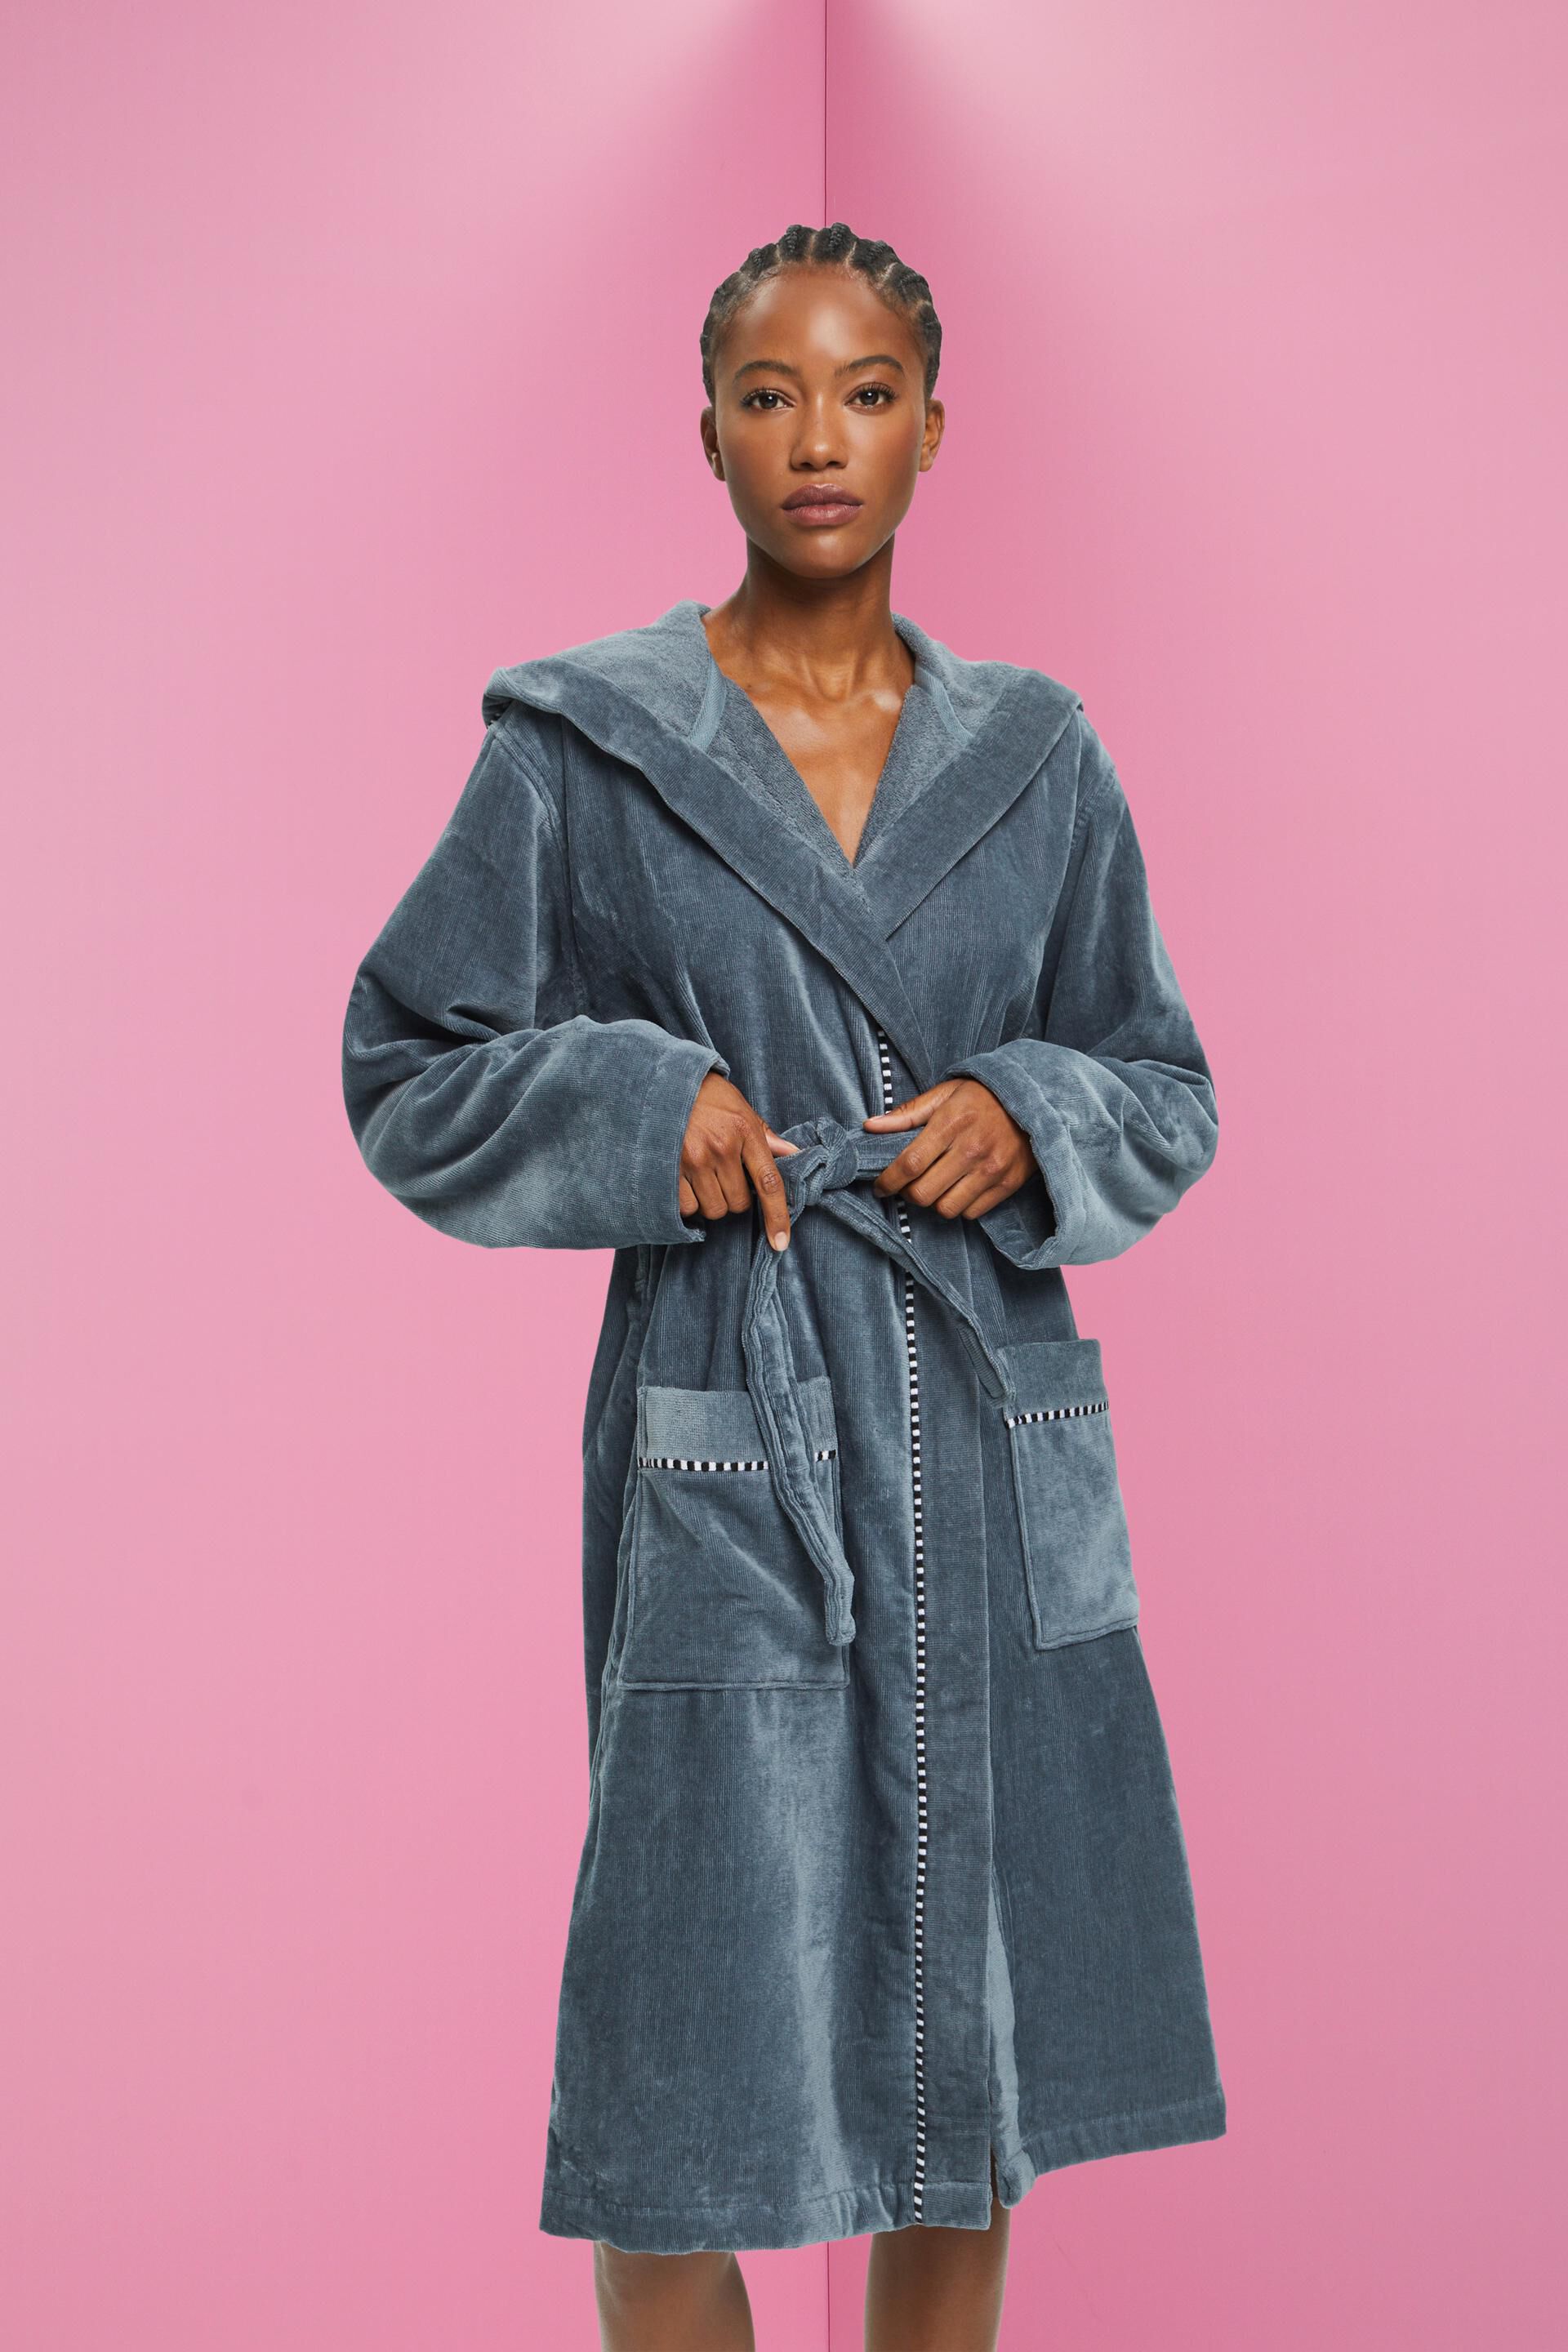 Suede bathrobe made of 100% cotton